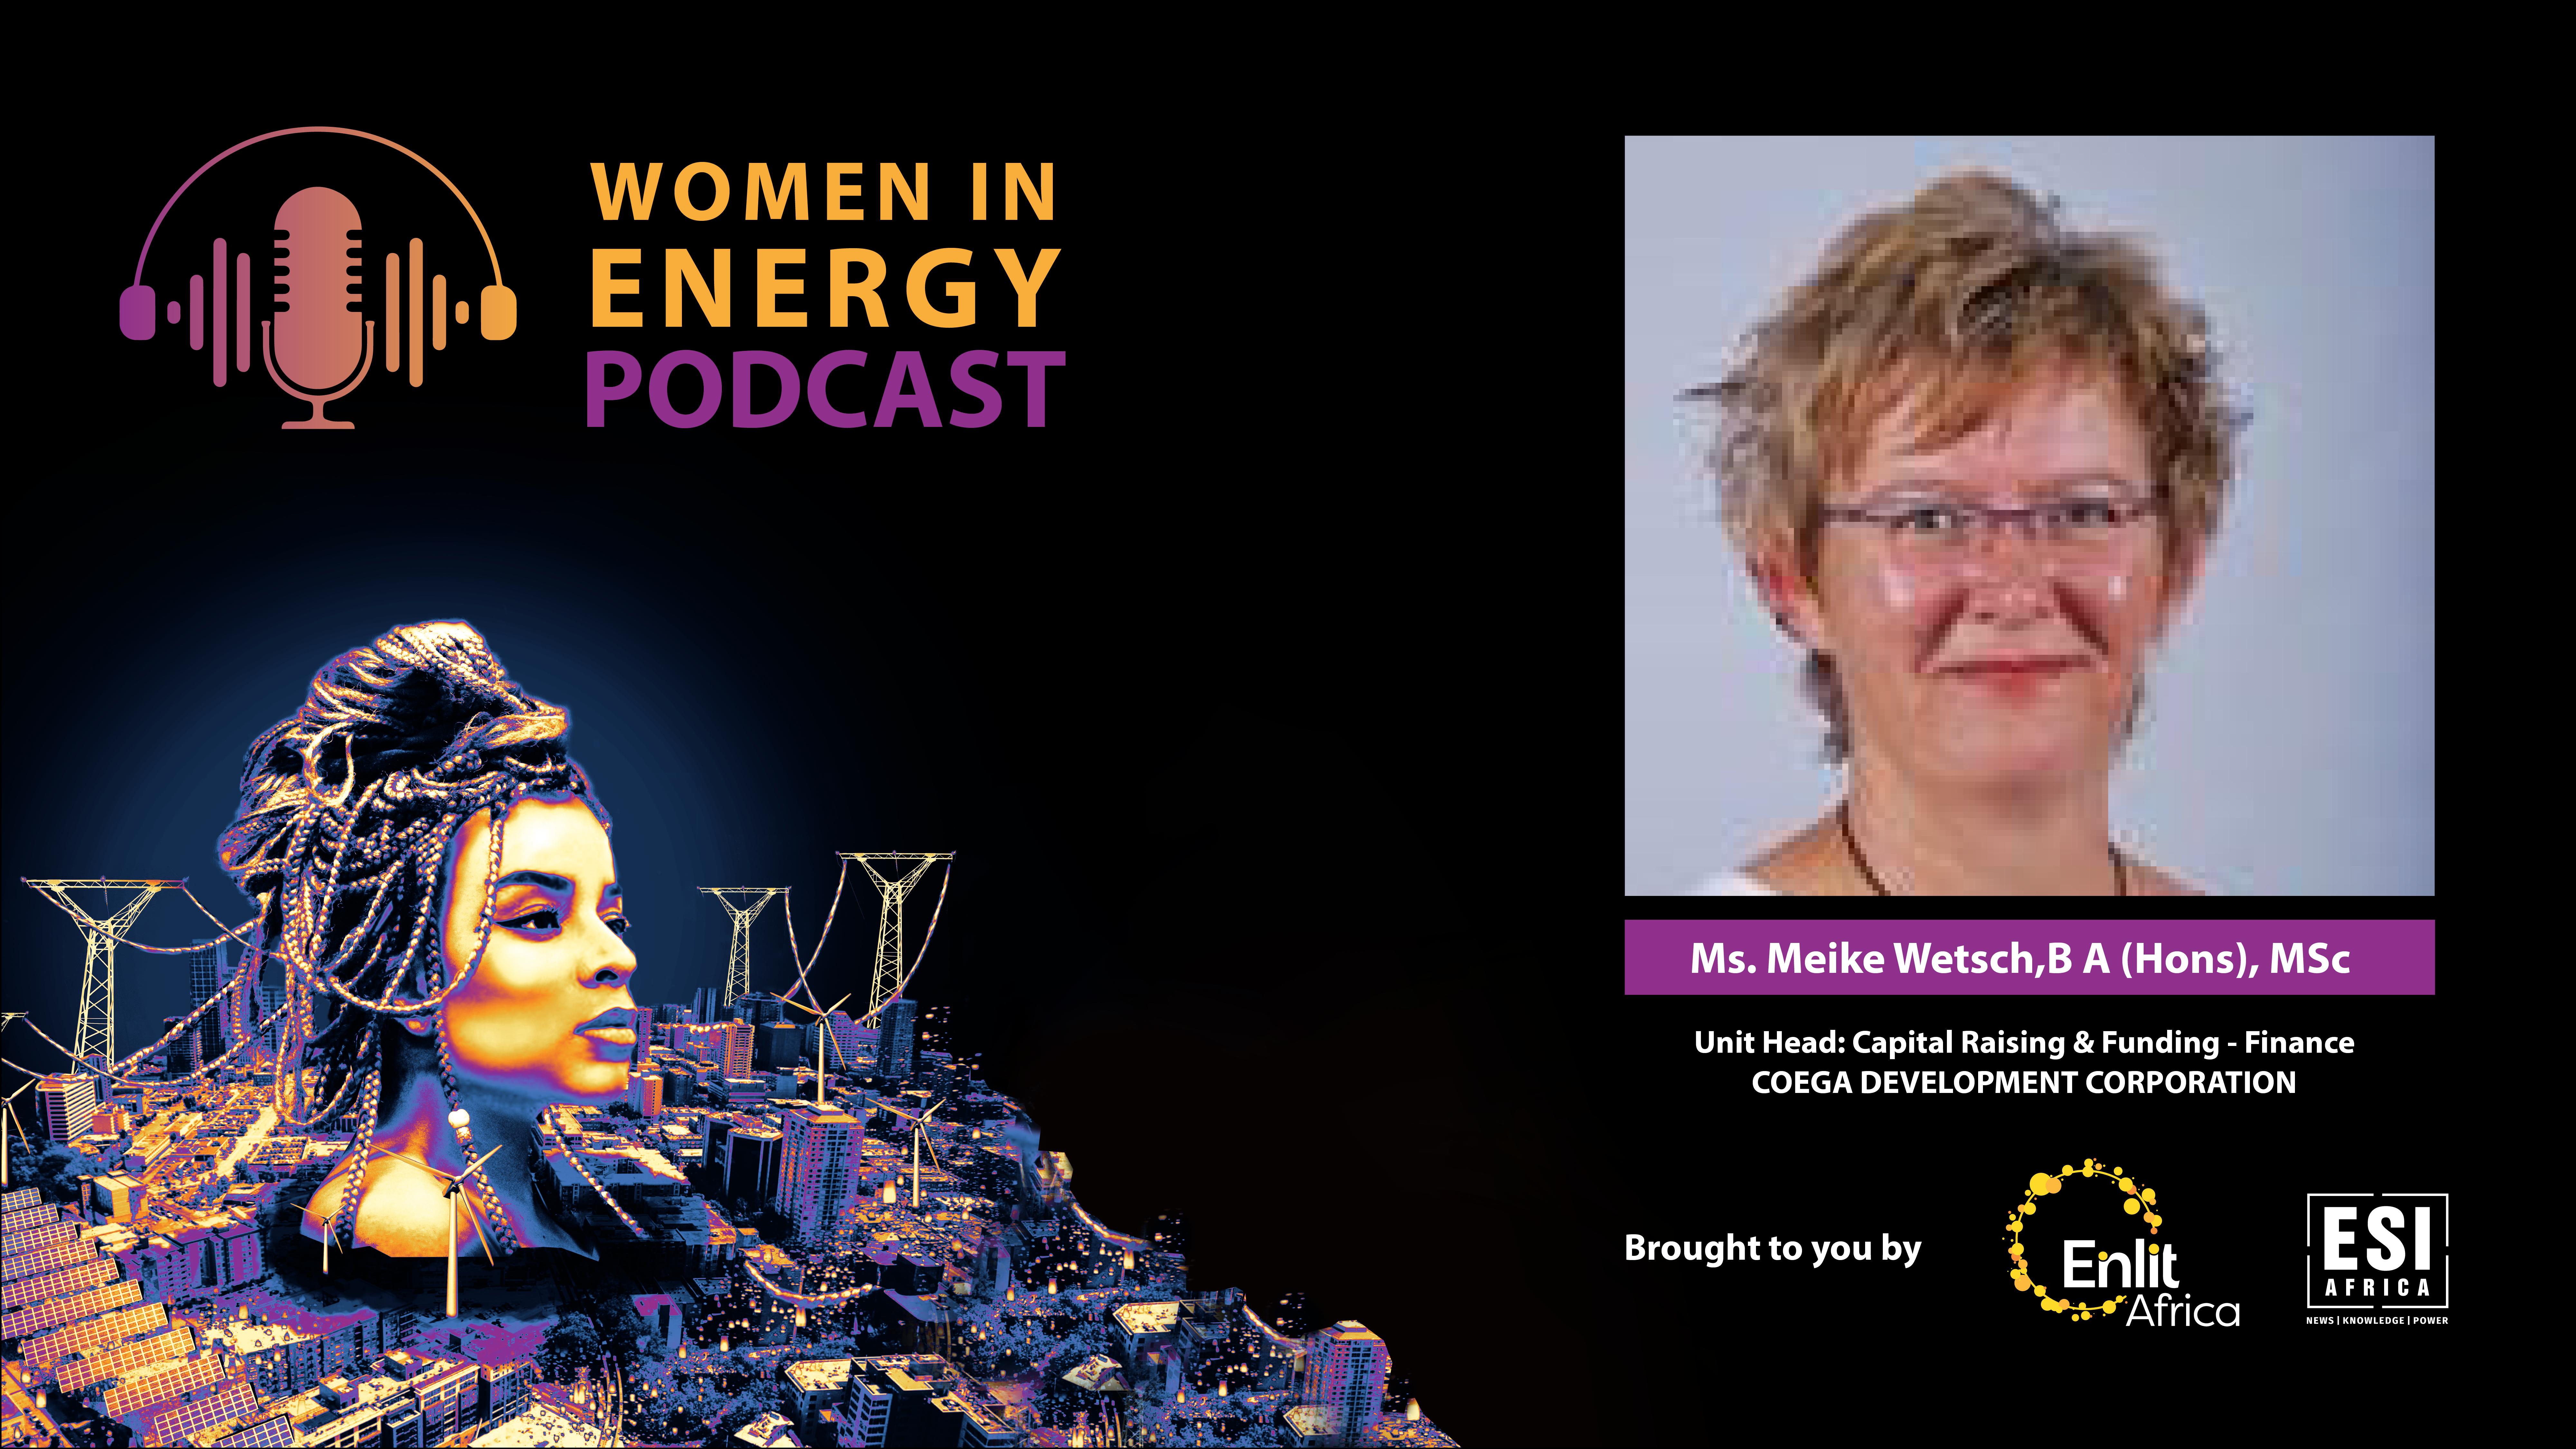 Women in Energy: An interview with Meike Wetsch